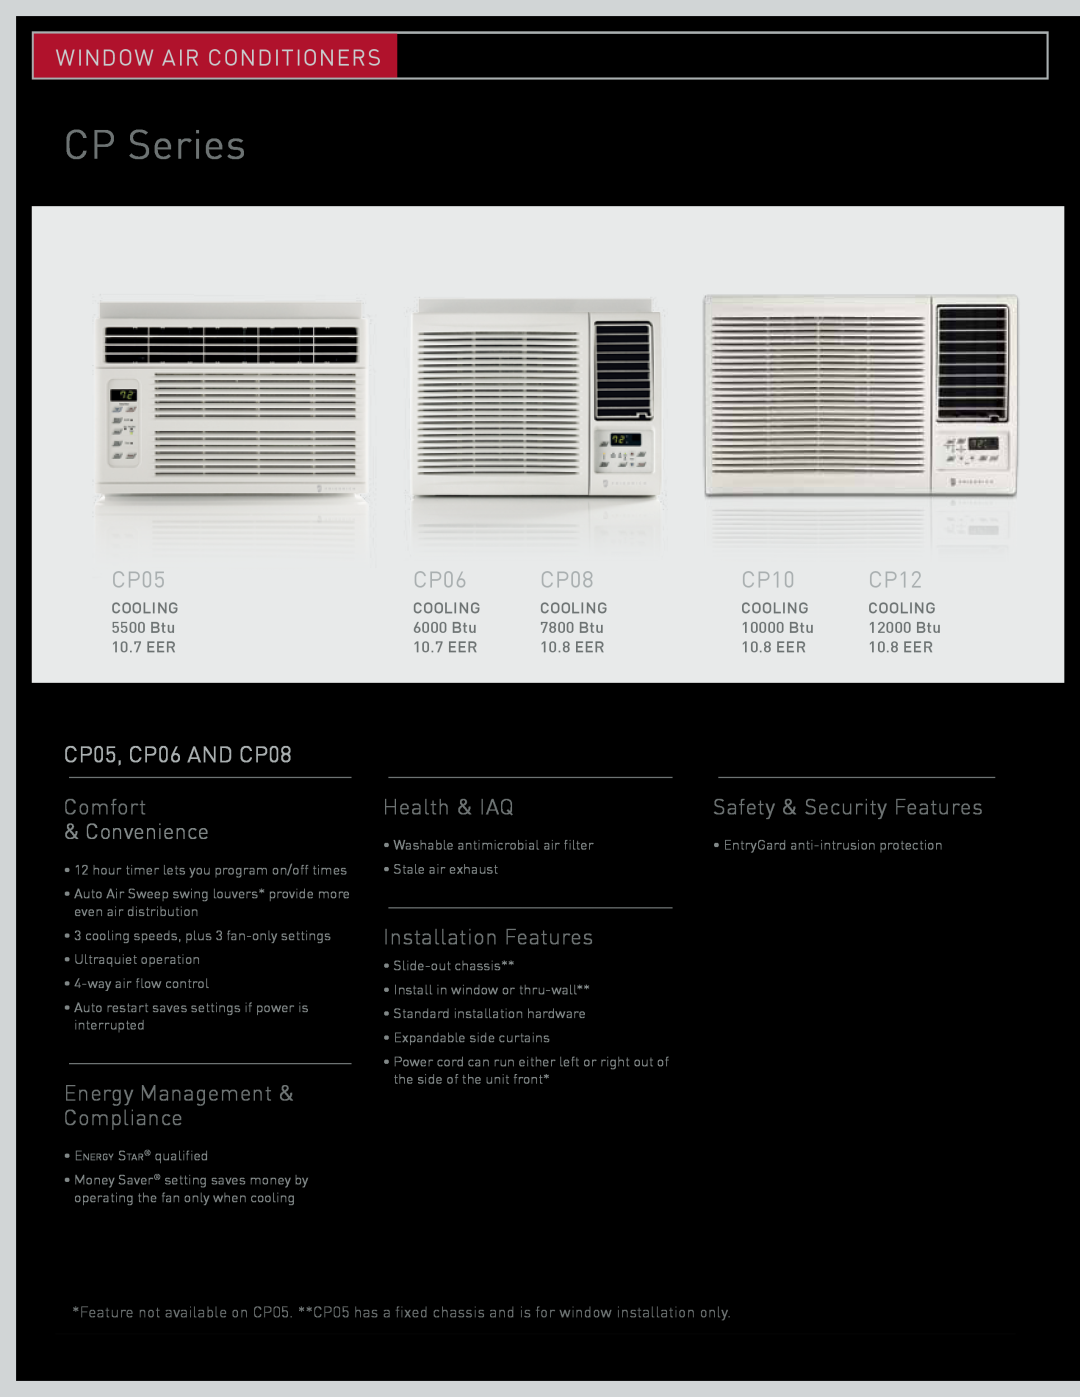 Friedrich Room Air Conditioners, CP15 CP Series, Window Air Conditioners, CP05, CP06 AND CP08, Convenience, CP10, CP12 